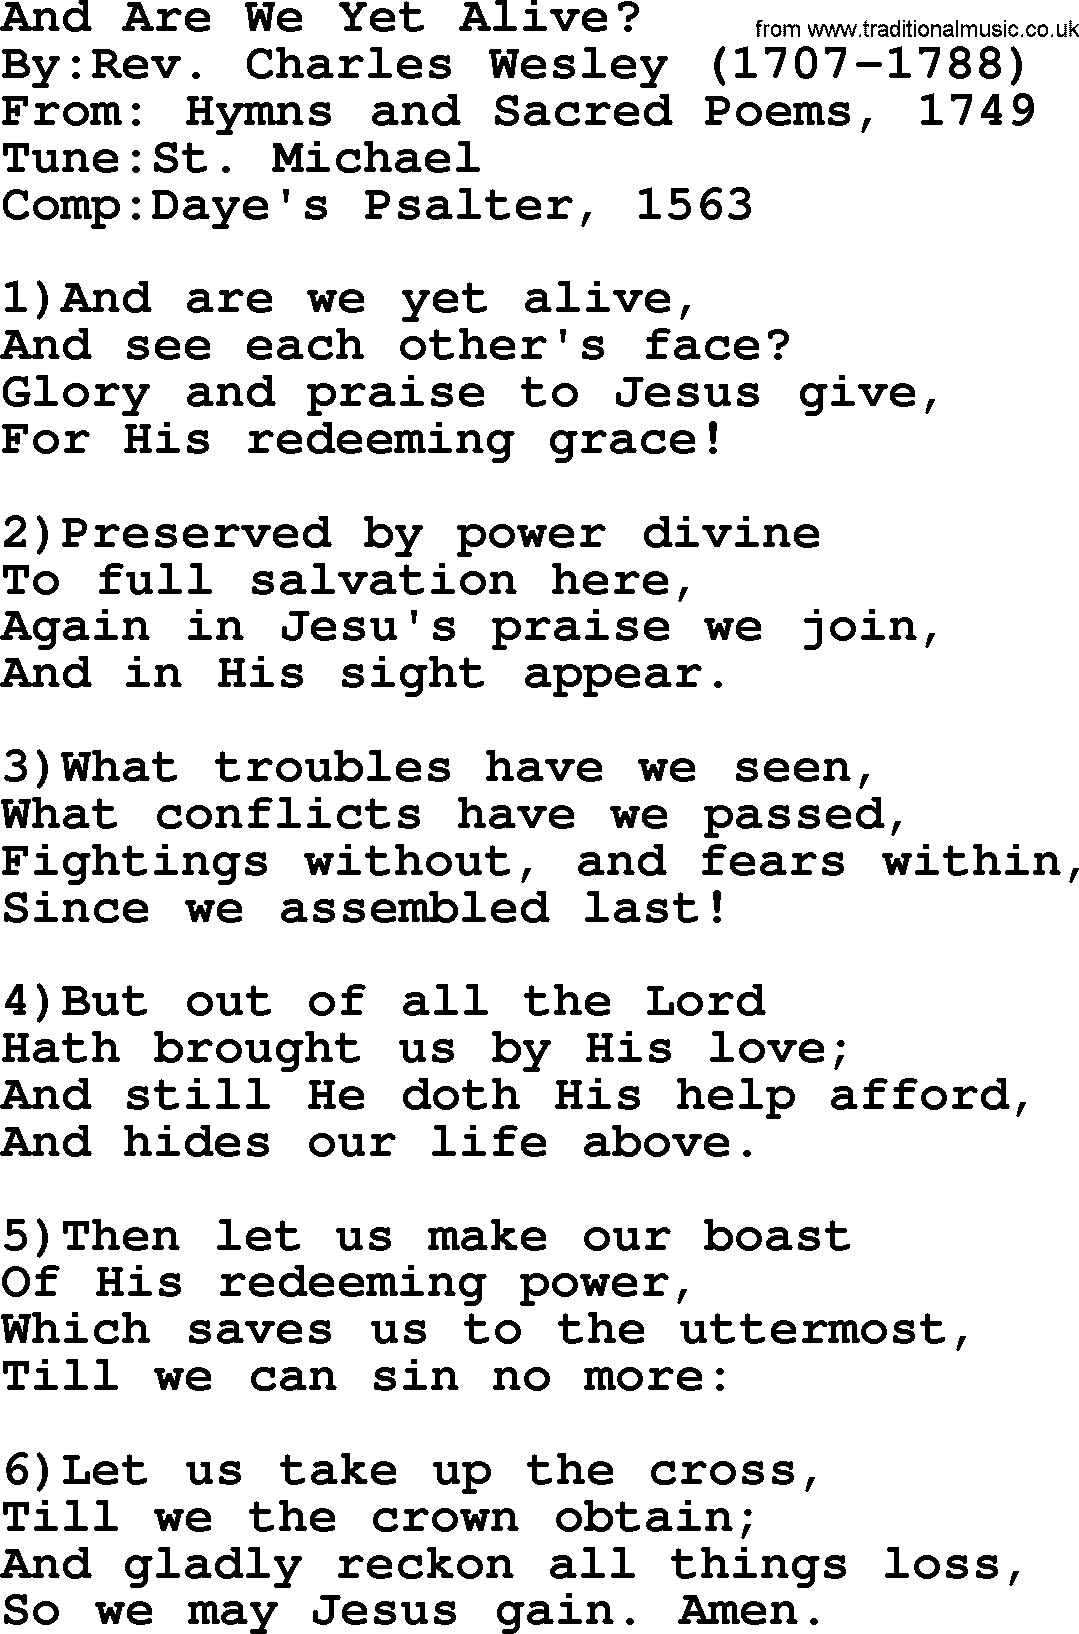 Methodist Hymn: And Are We Yet Alive, lyrics